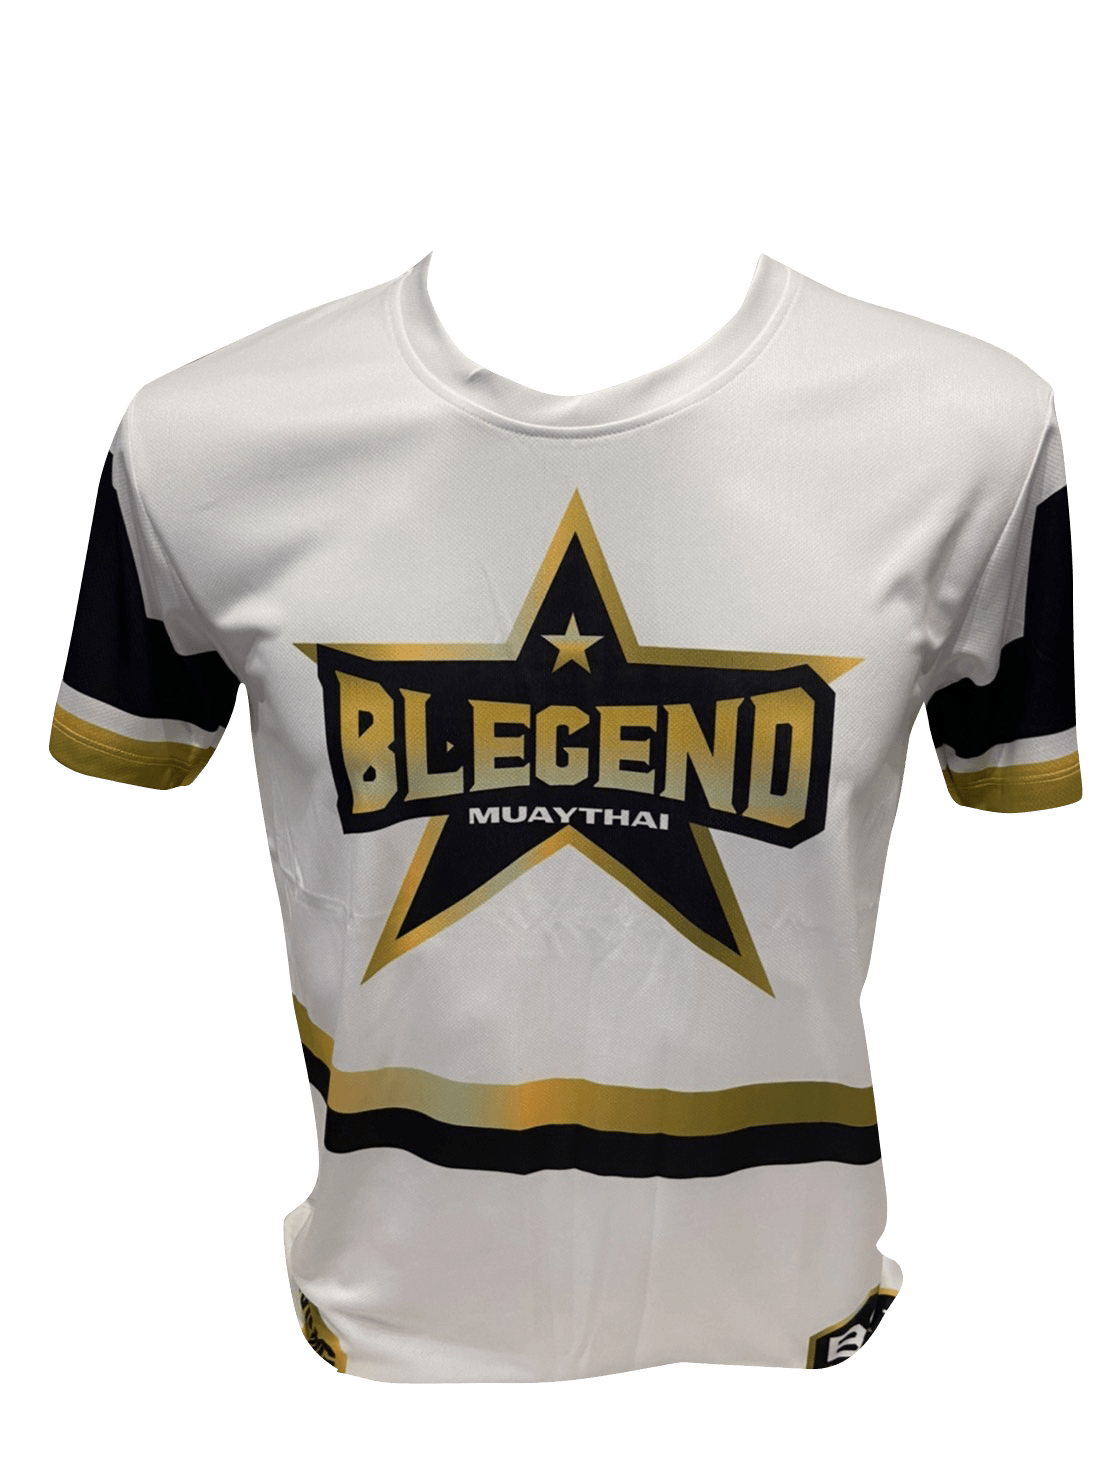 Blegend T-shirt Road legend